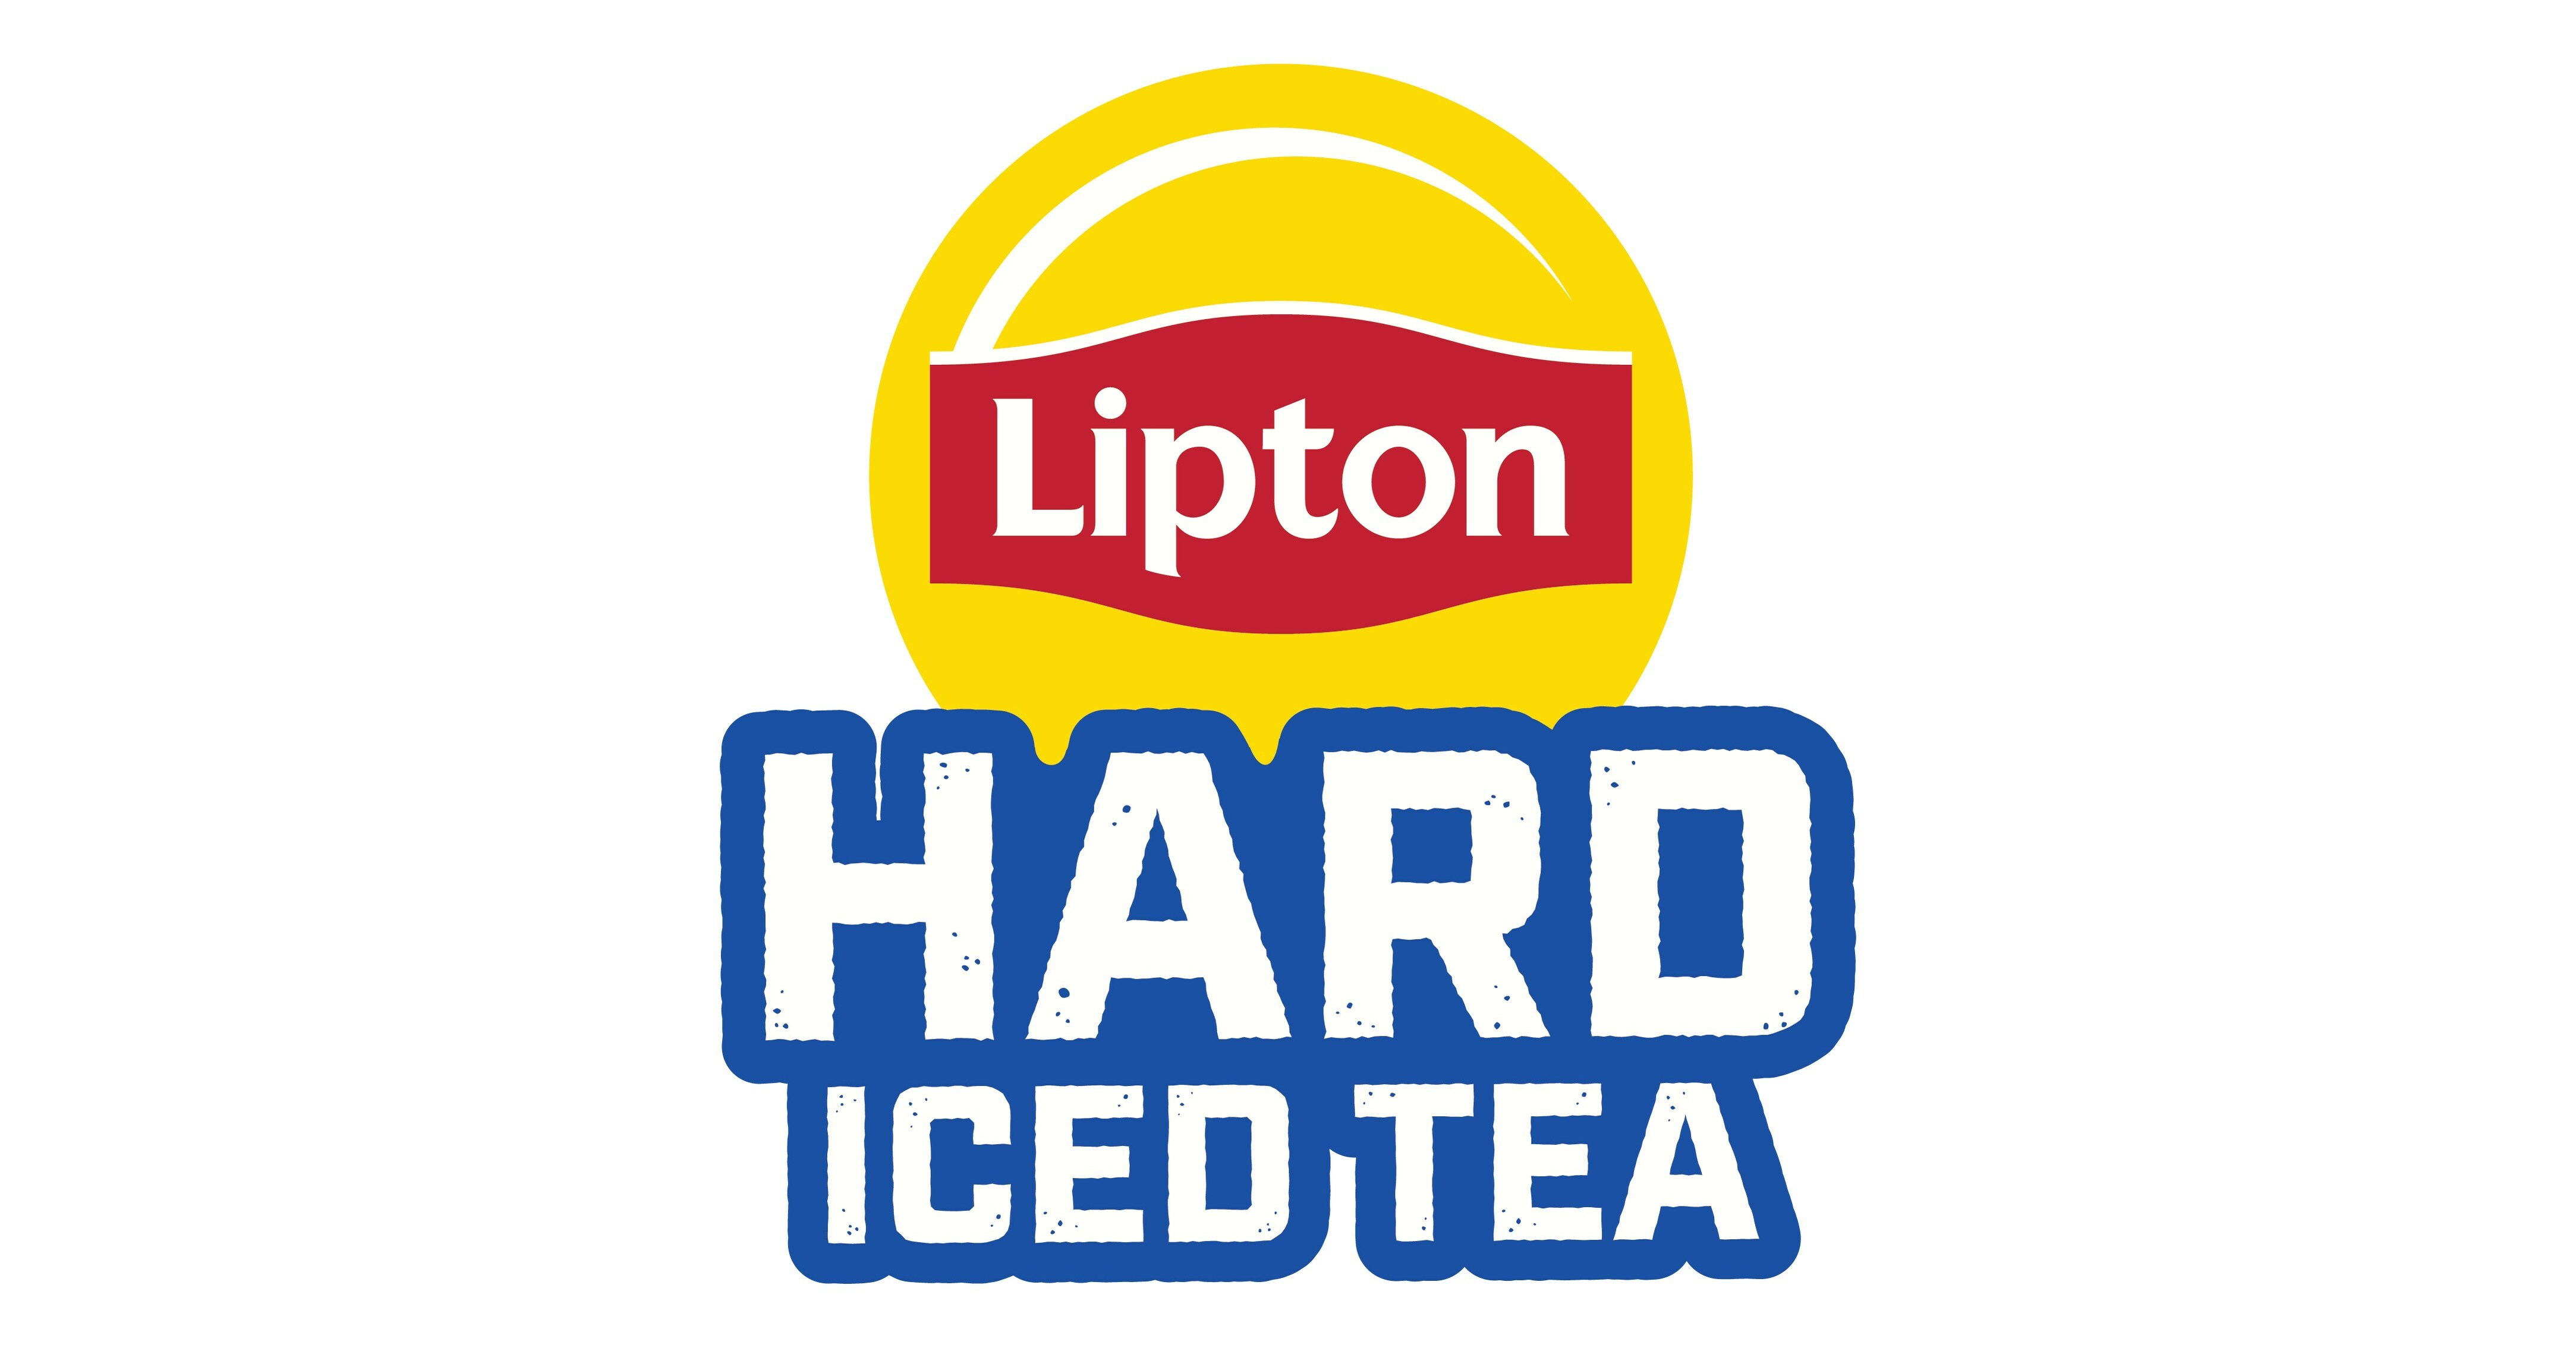 INTRODUCING LIPTON HARD ICED TEA